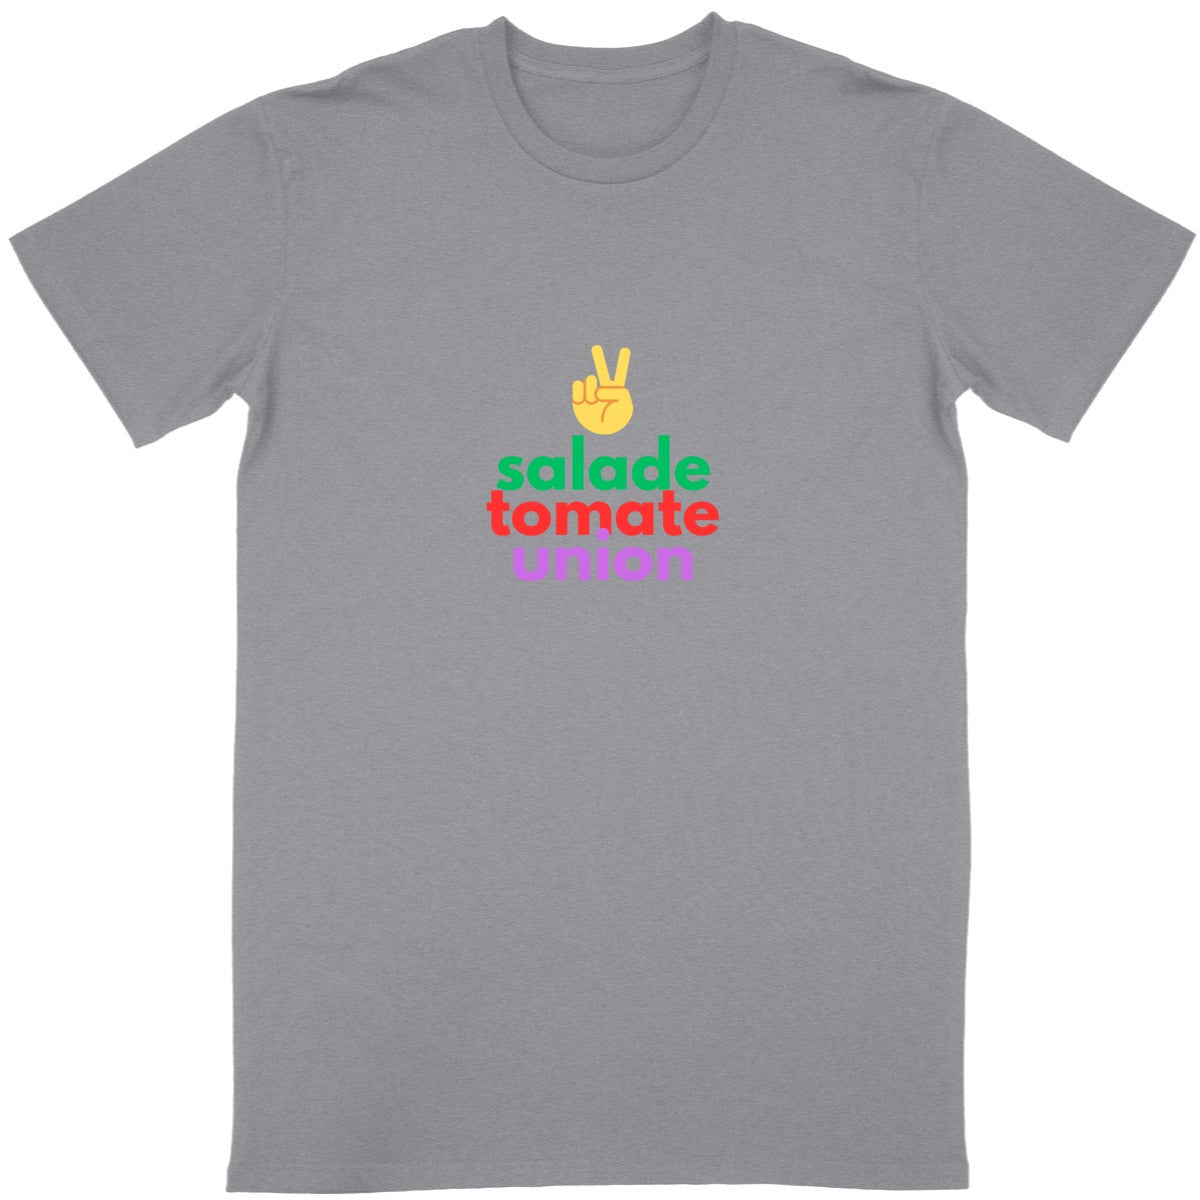 T-shirt Unisexe 100% Conversion Bio Salade Tomate Union